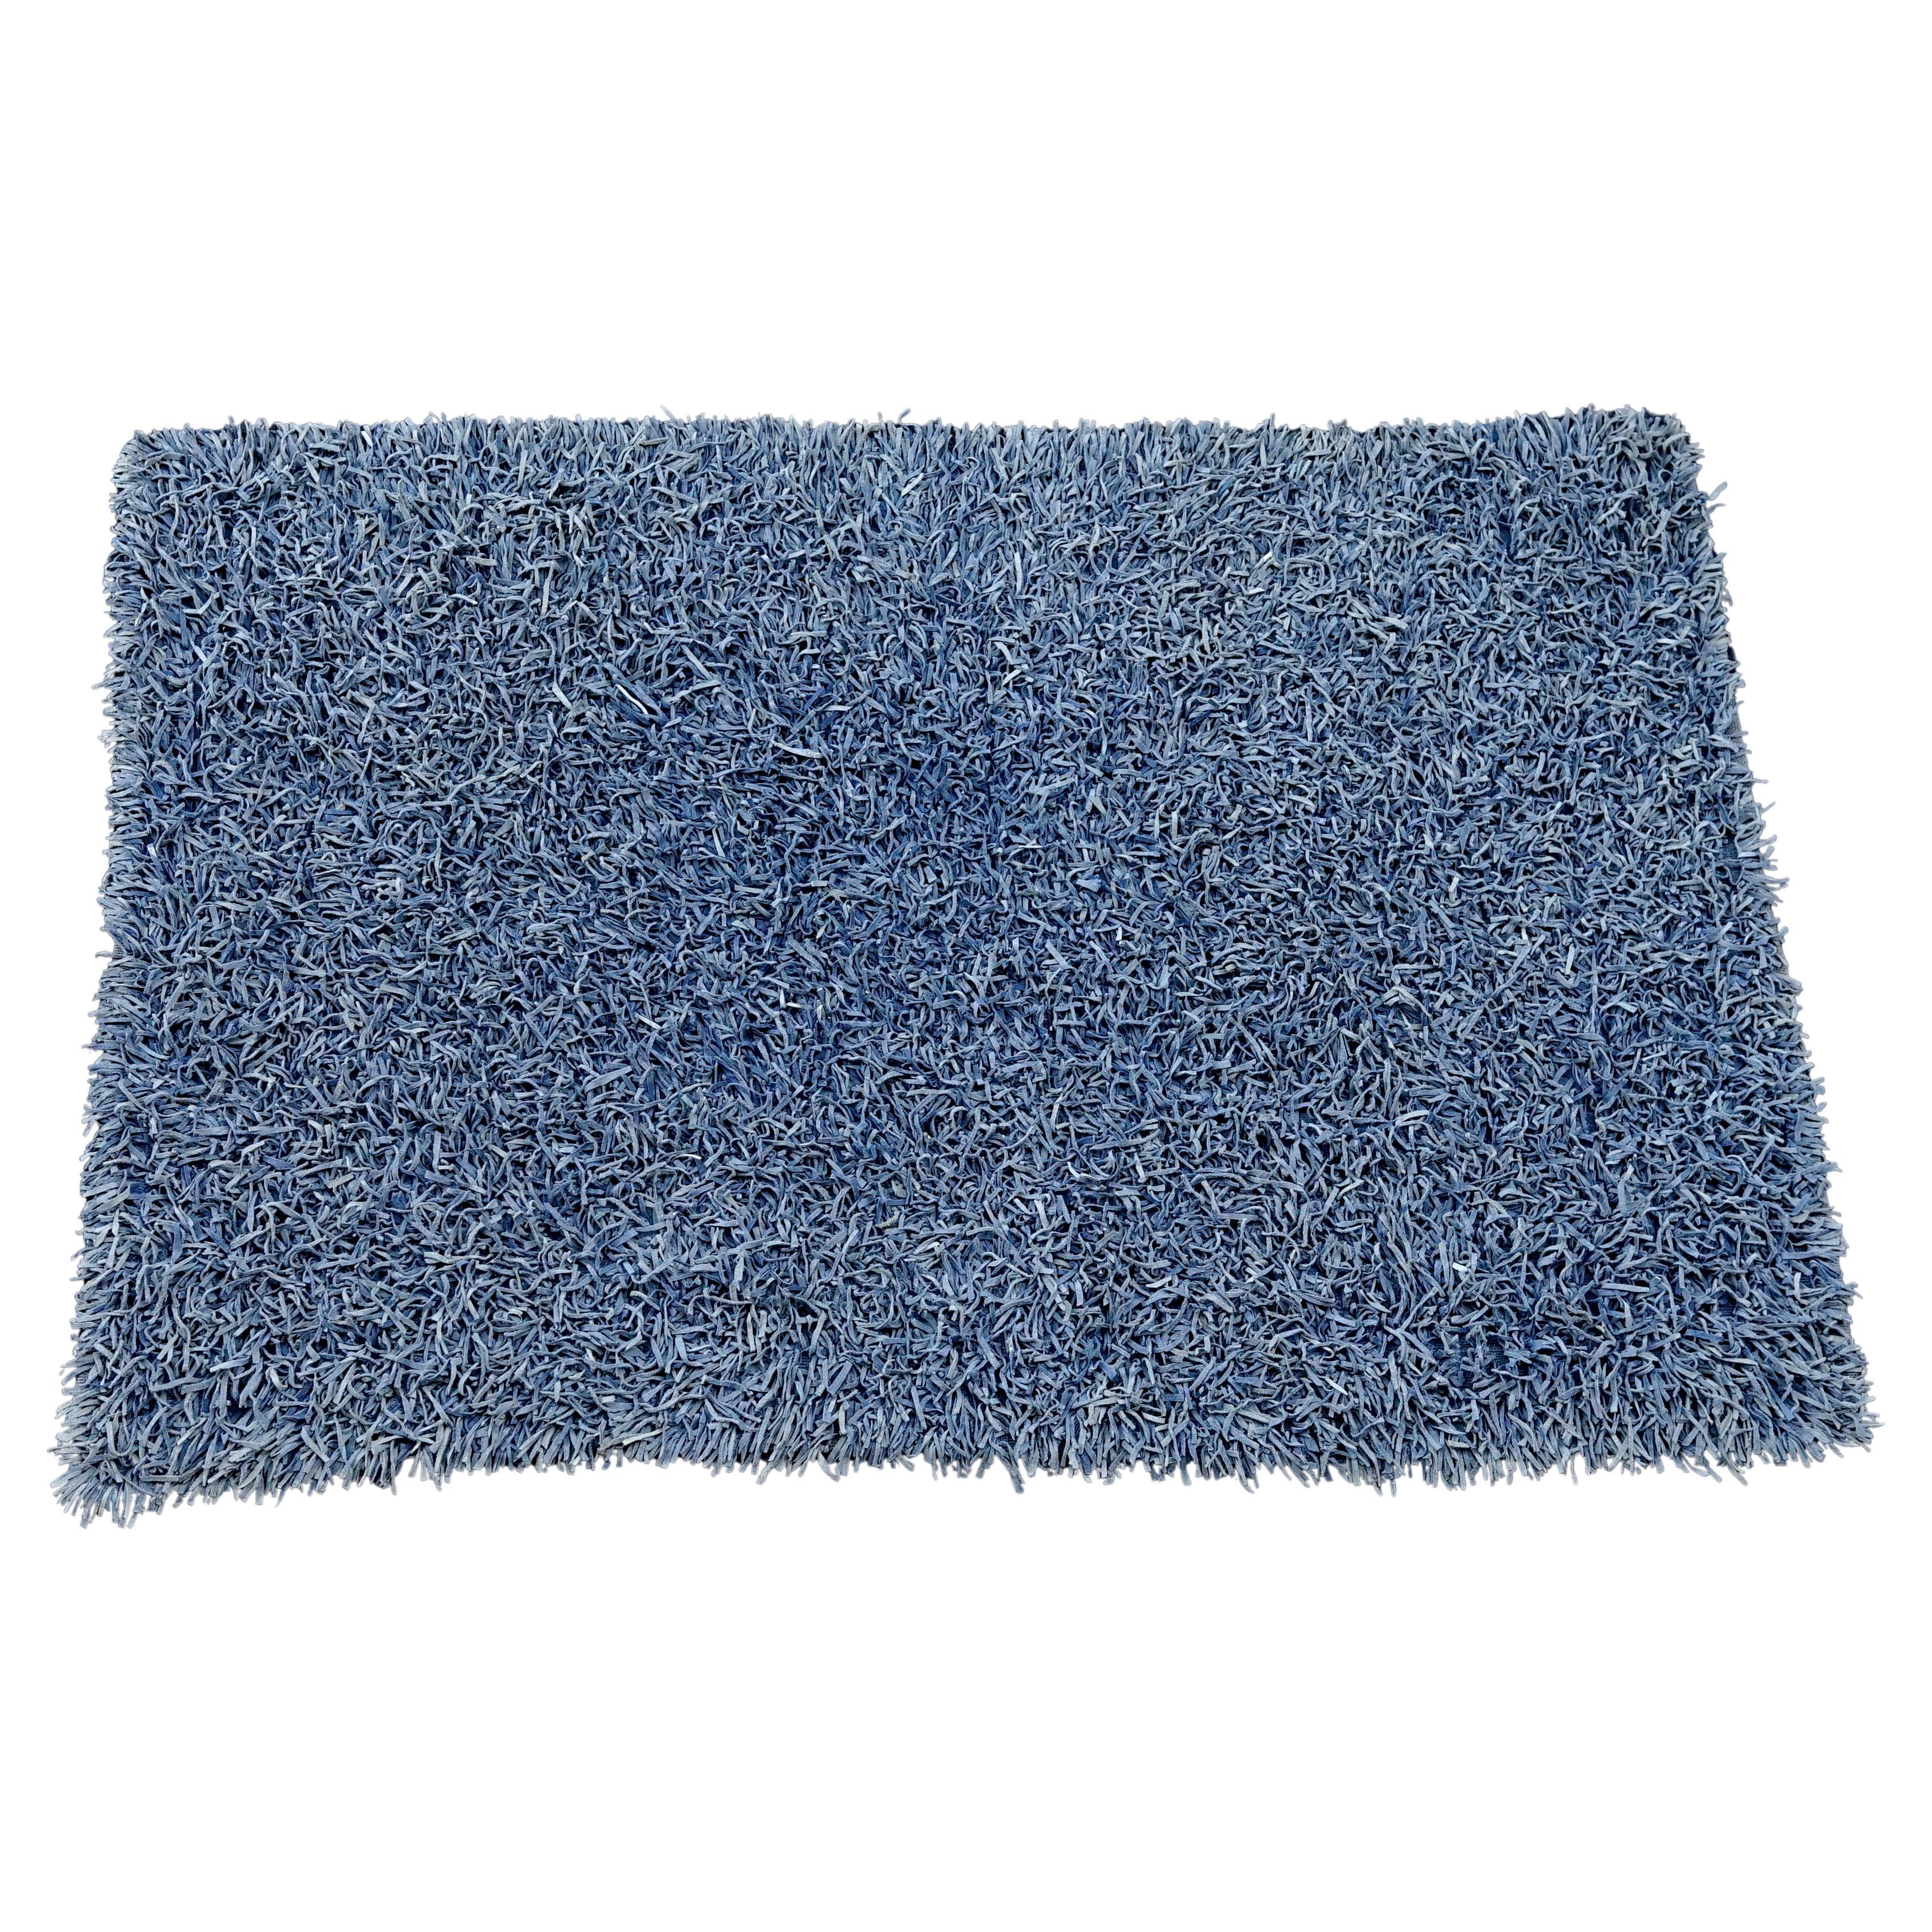 Chanda Leather Stormy Blue Shag Plush Carpet Area Rug For Sale